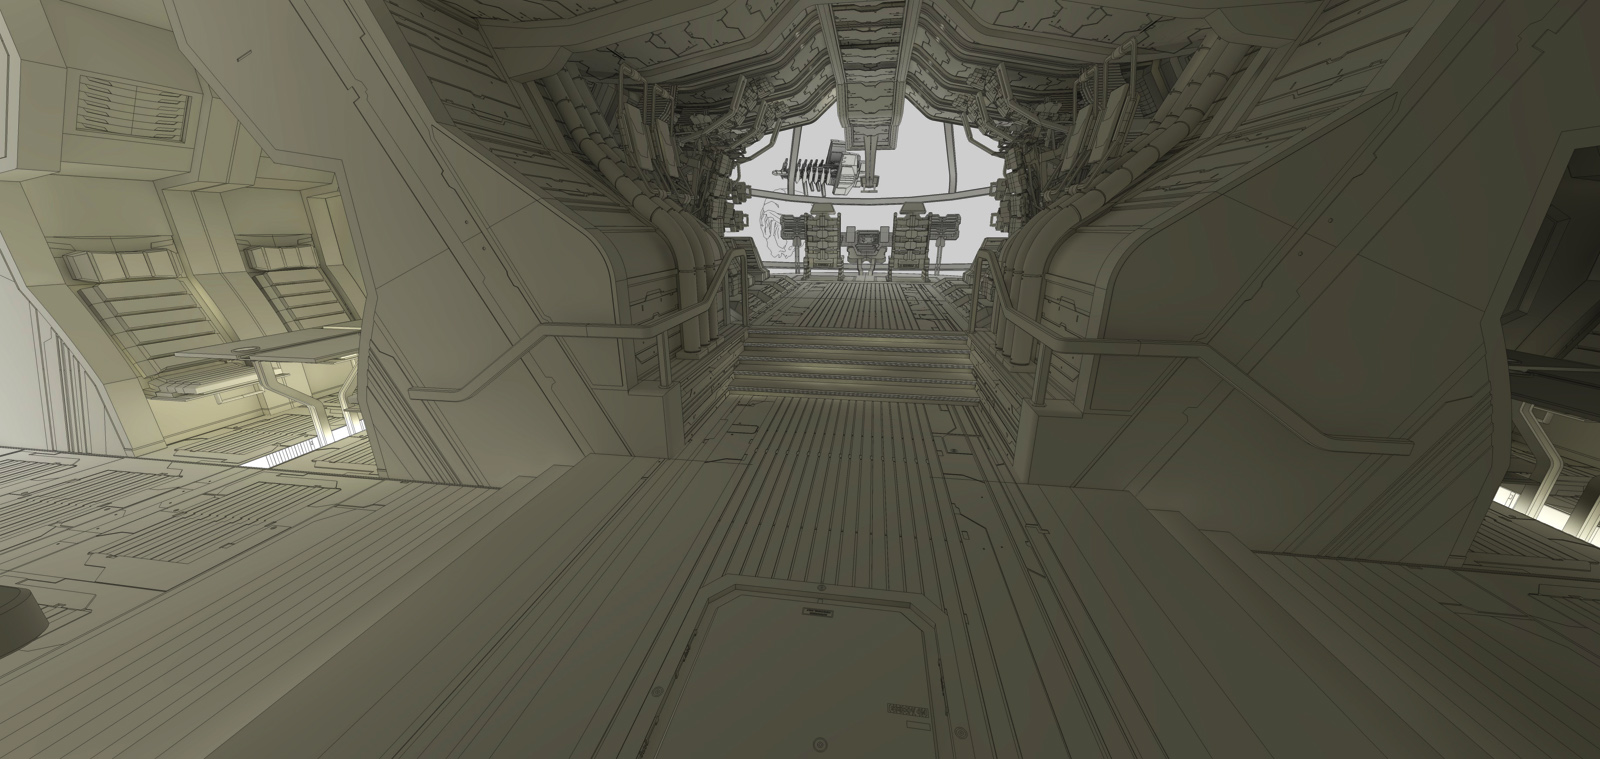 Scene Dead Space Isaac Spaceship Part 6 2011-04-24 22432400000 1600.jpg